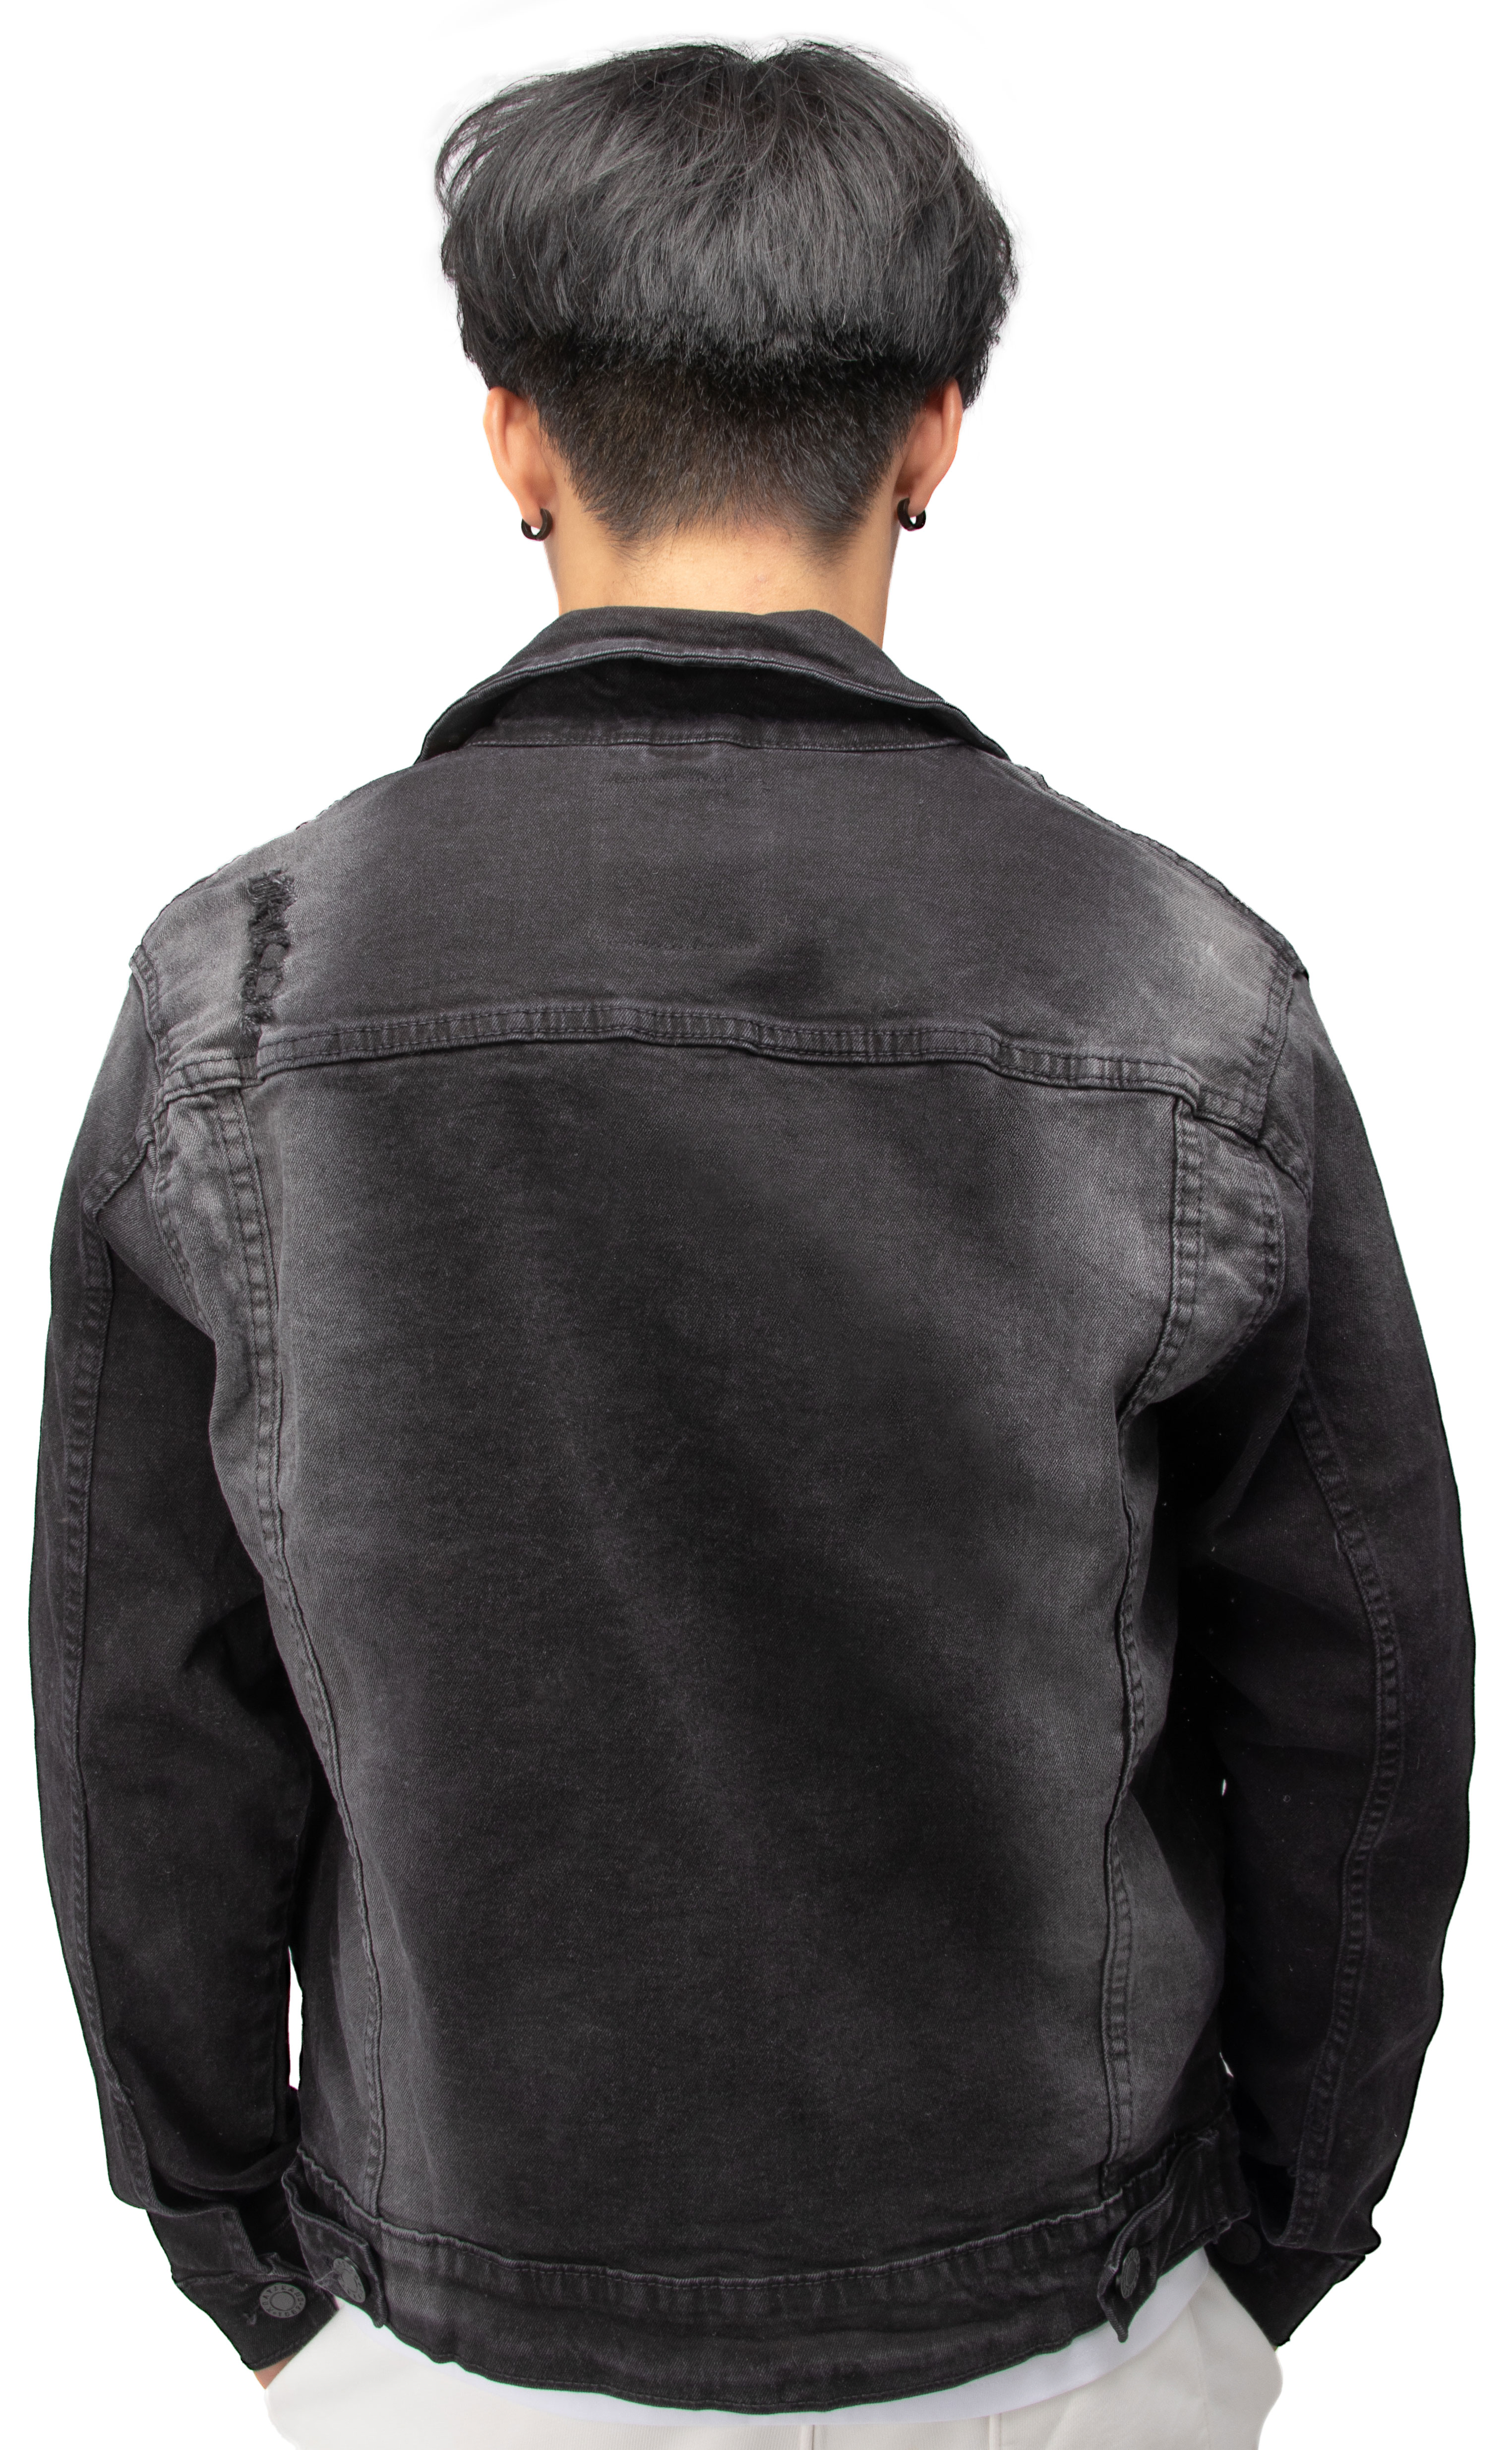 X RAY Men's Denim Jacket, Washed Ripped Distressed Flex Stretch Casual Trucker Biker Jean Jacket, Black Denim - Ripped, Large - image 3 of 9